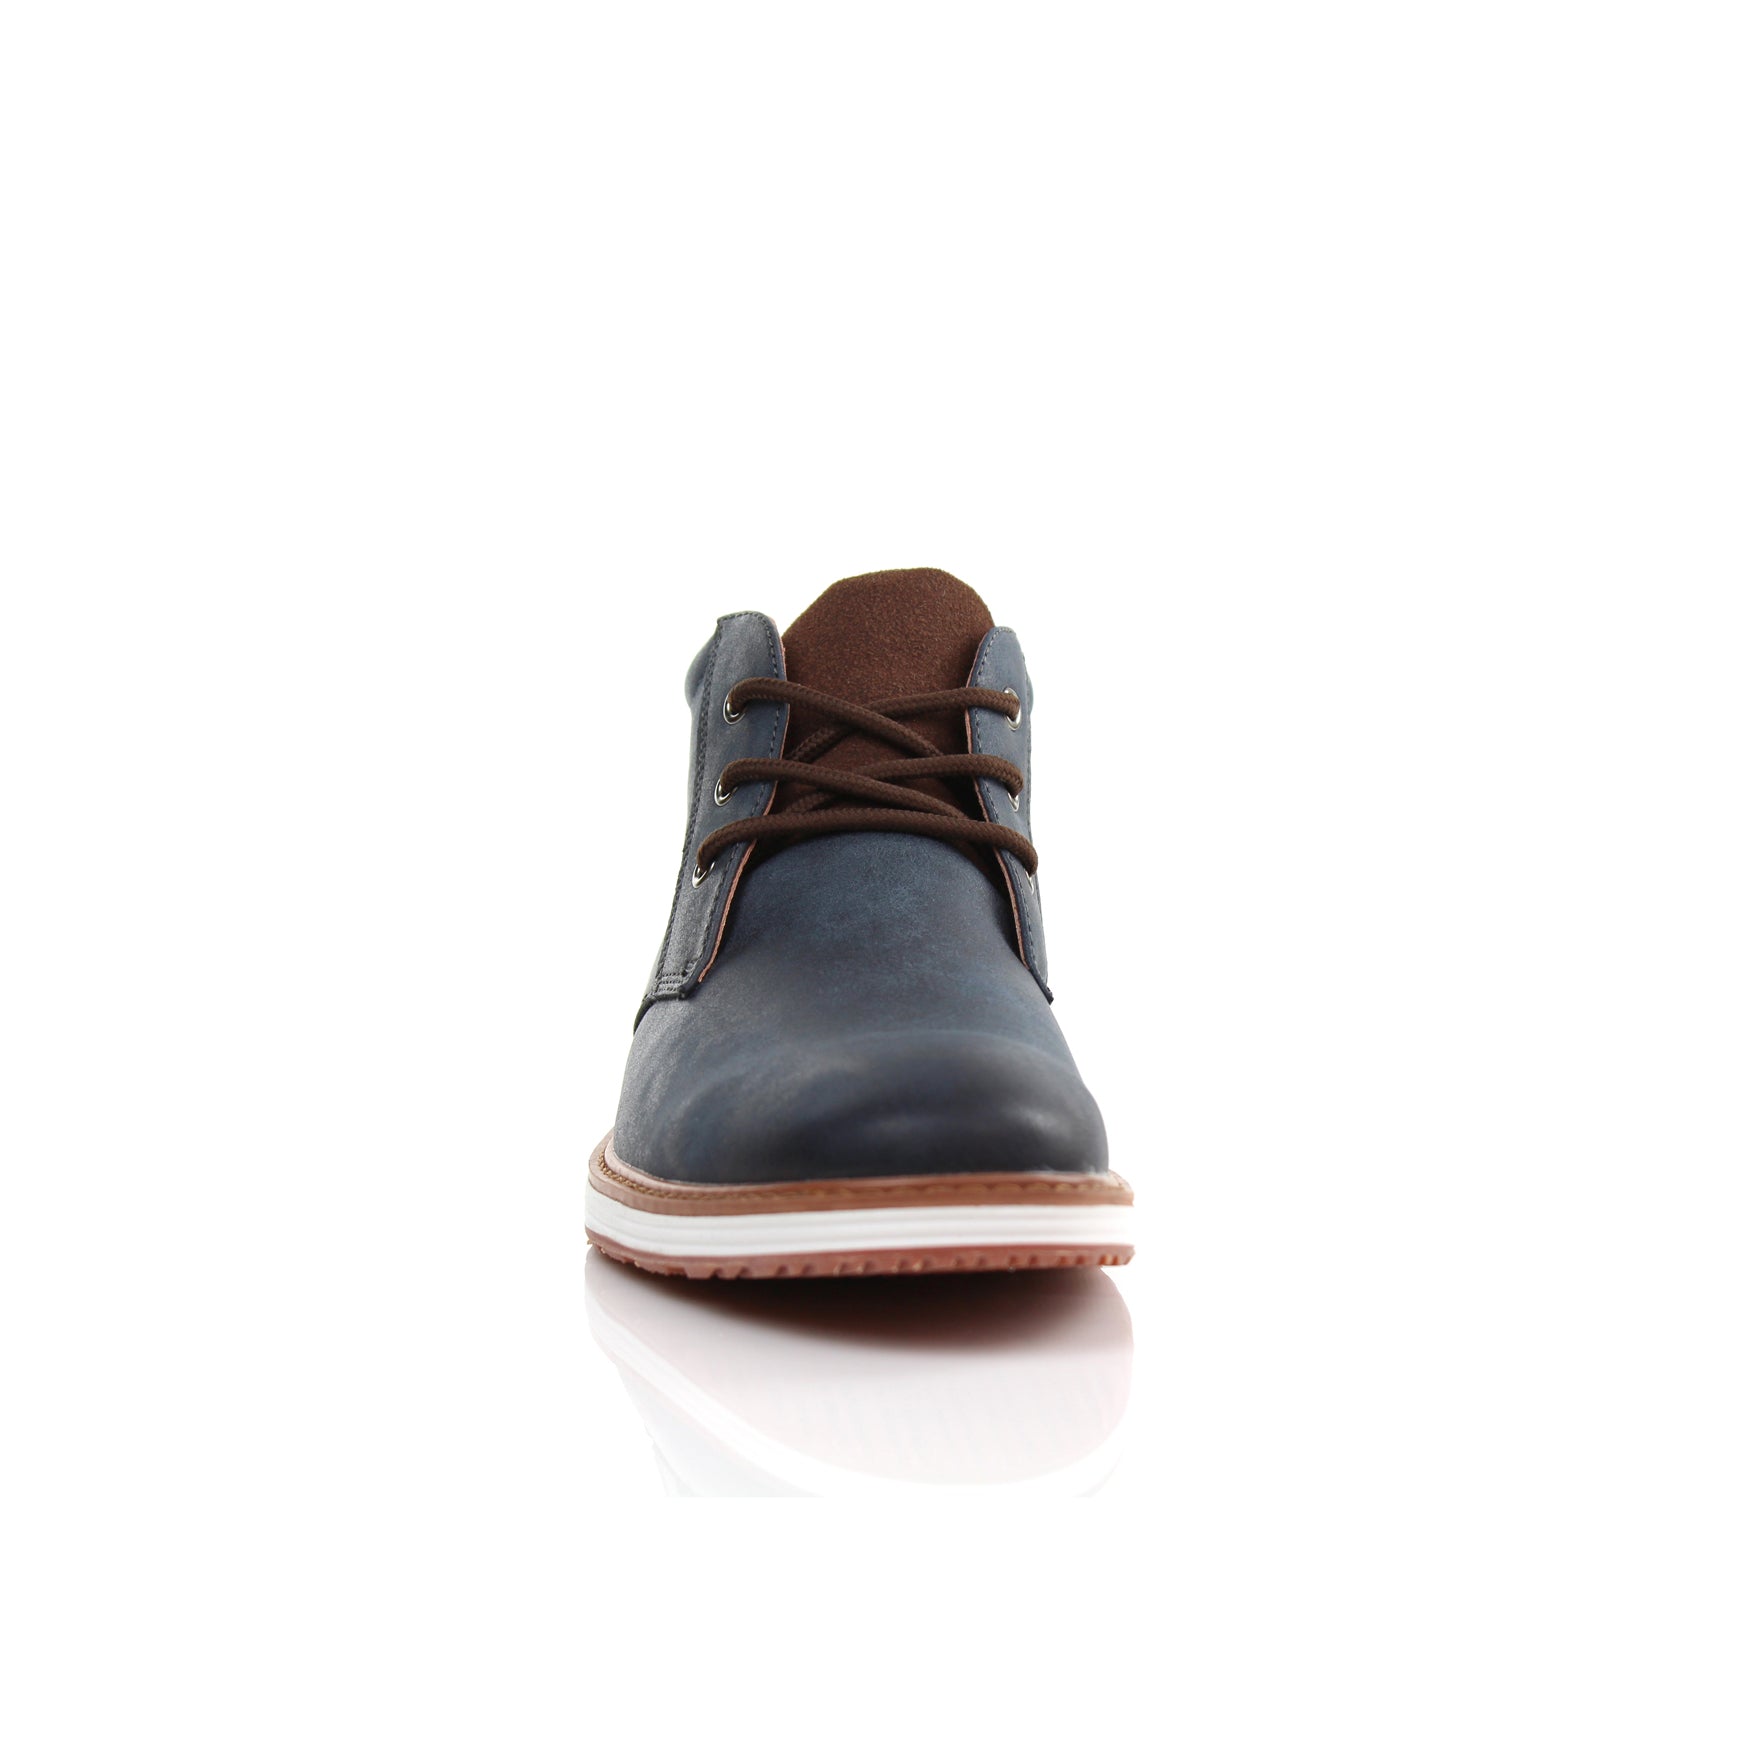 Sneaker Chukka Boots | Houstan by Ferro Aldo | Conal Footwear | Front Angle View